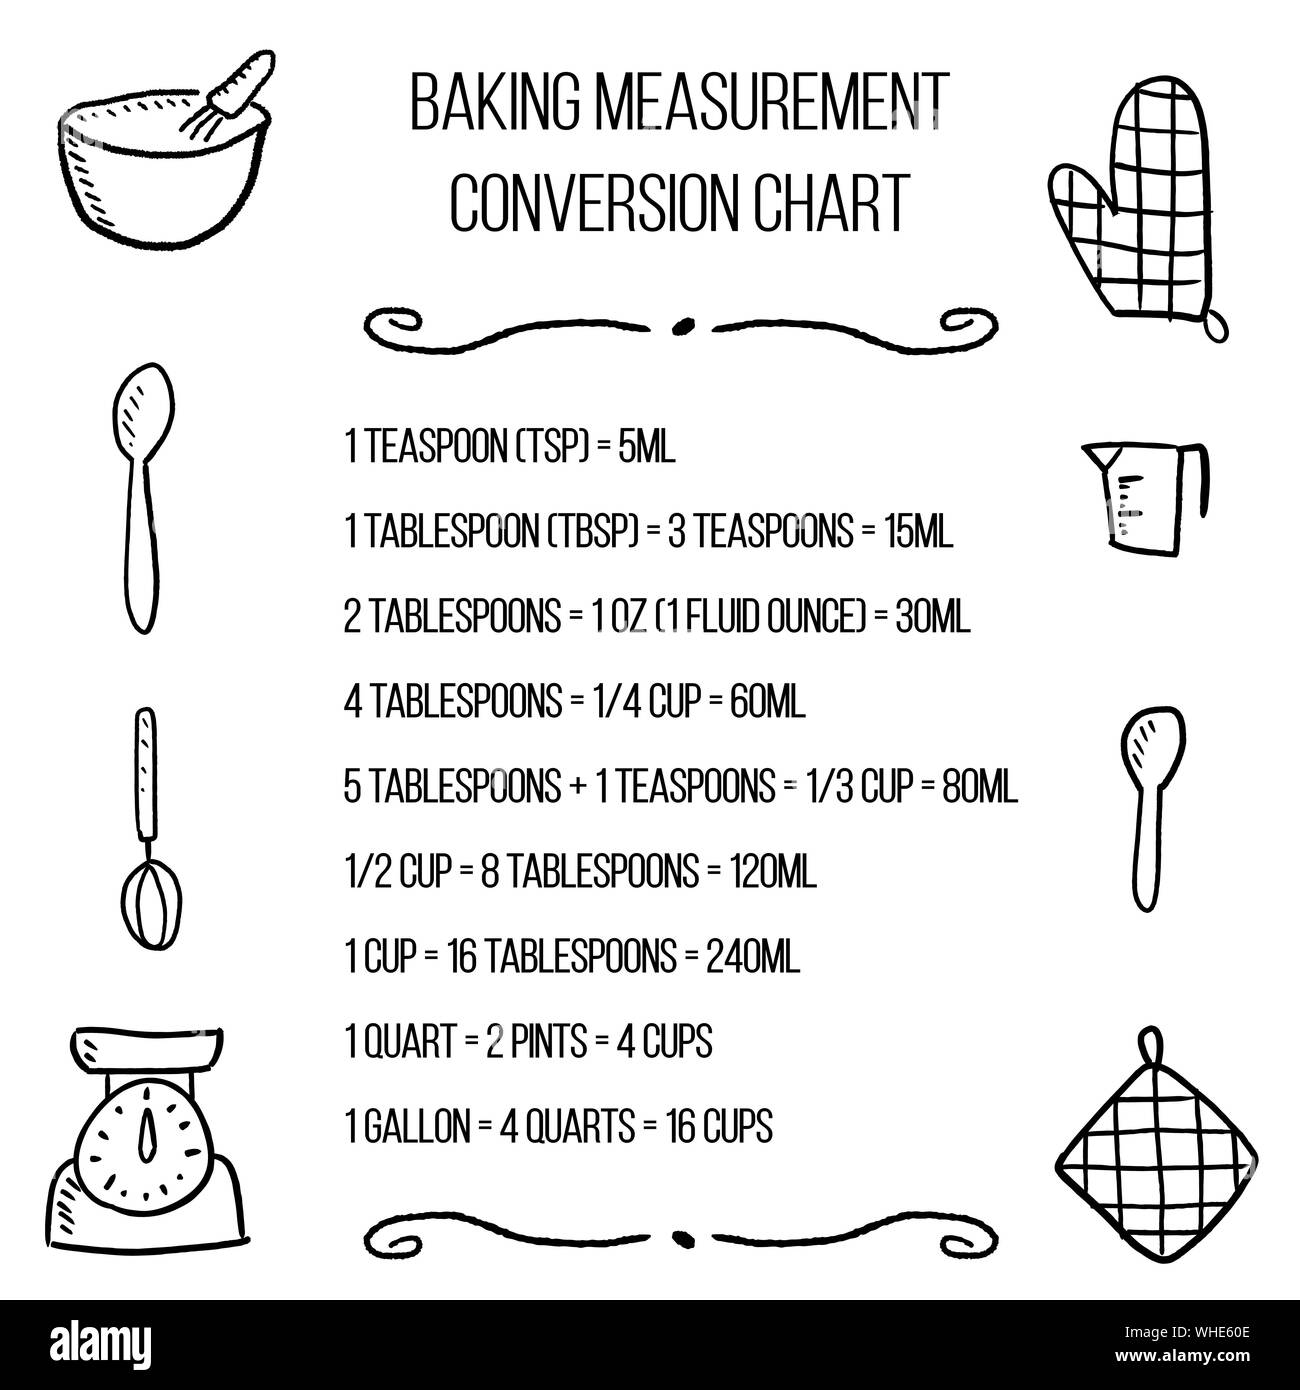 Baking units conversion chart - kitchen measurement units ...